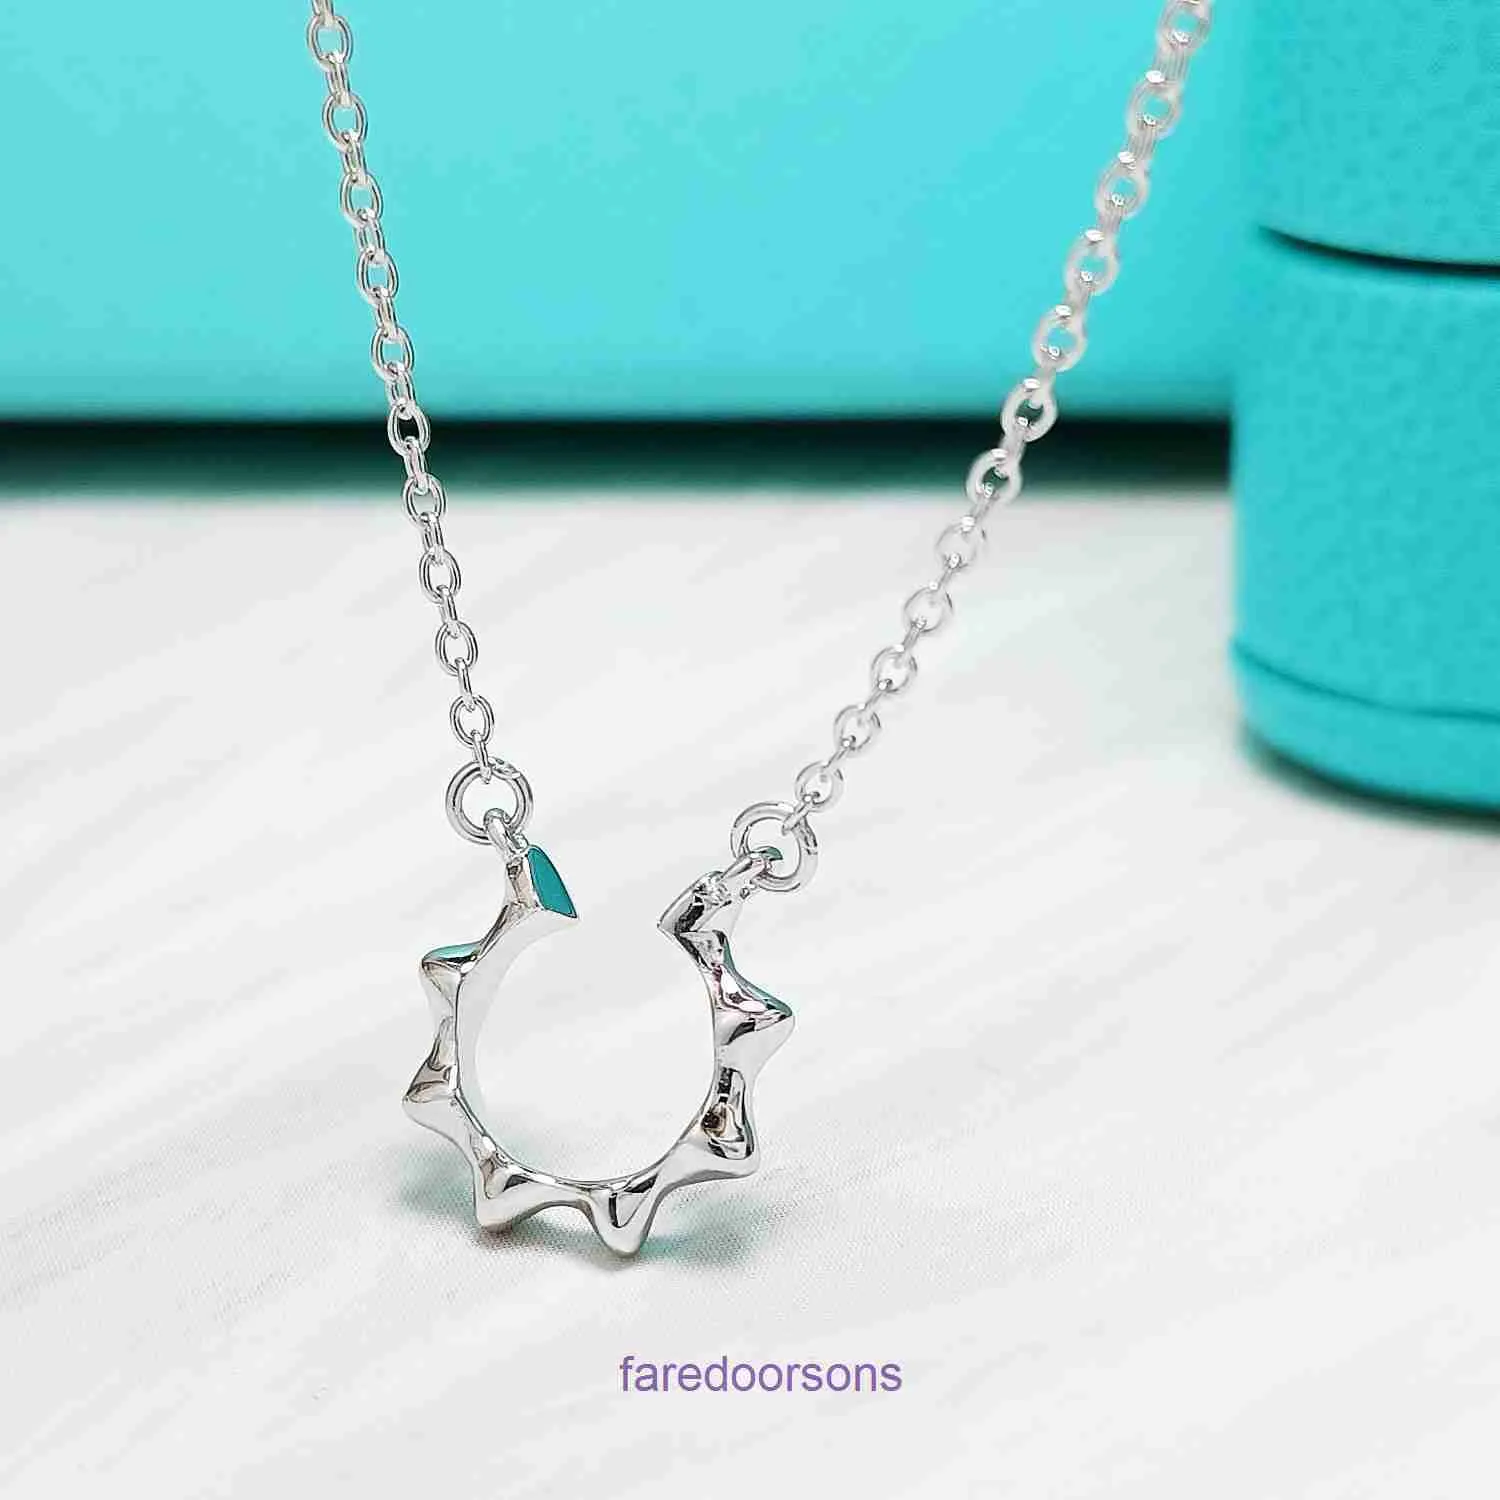 Tifannissm necklace chain heart necklaces jewelry pendants Home Sterling Silver S925 Geometric Edge Pendant Simple and Versatile Have Original Box